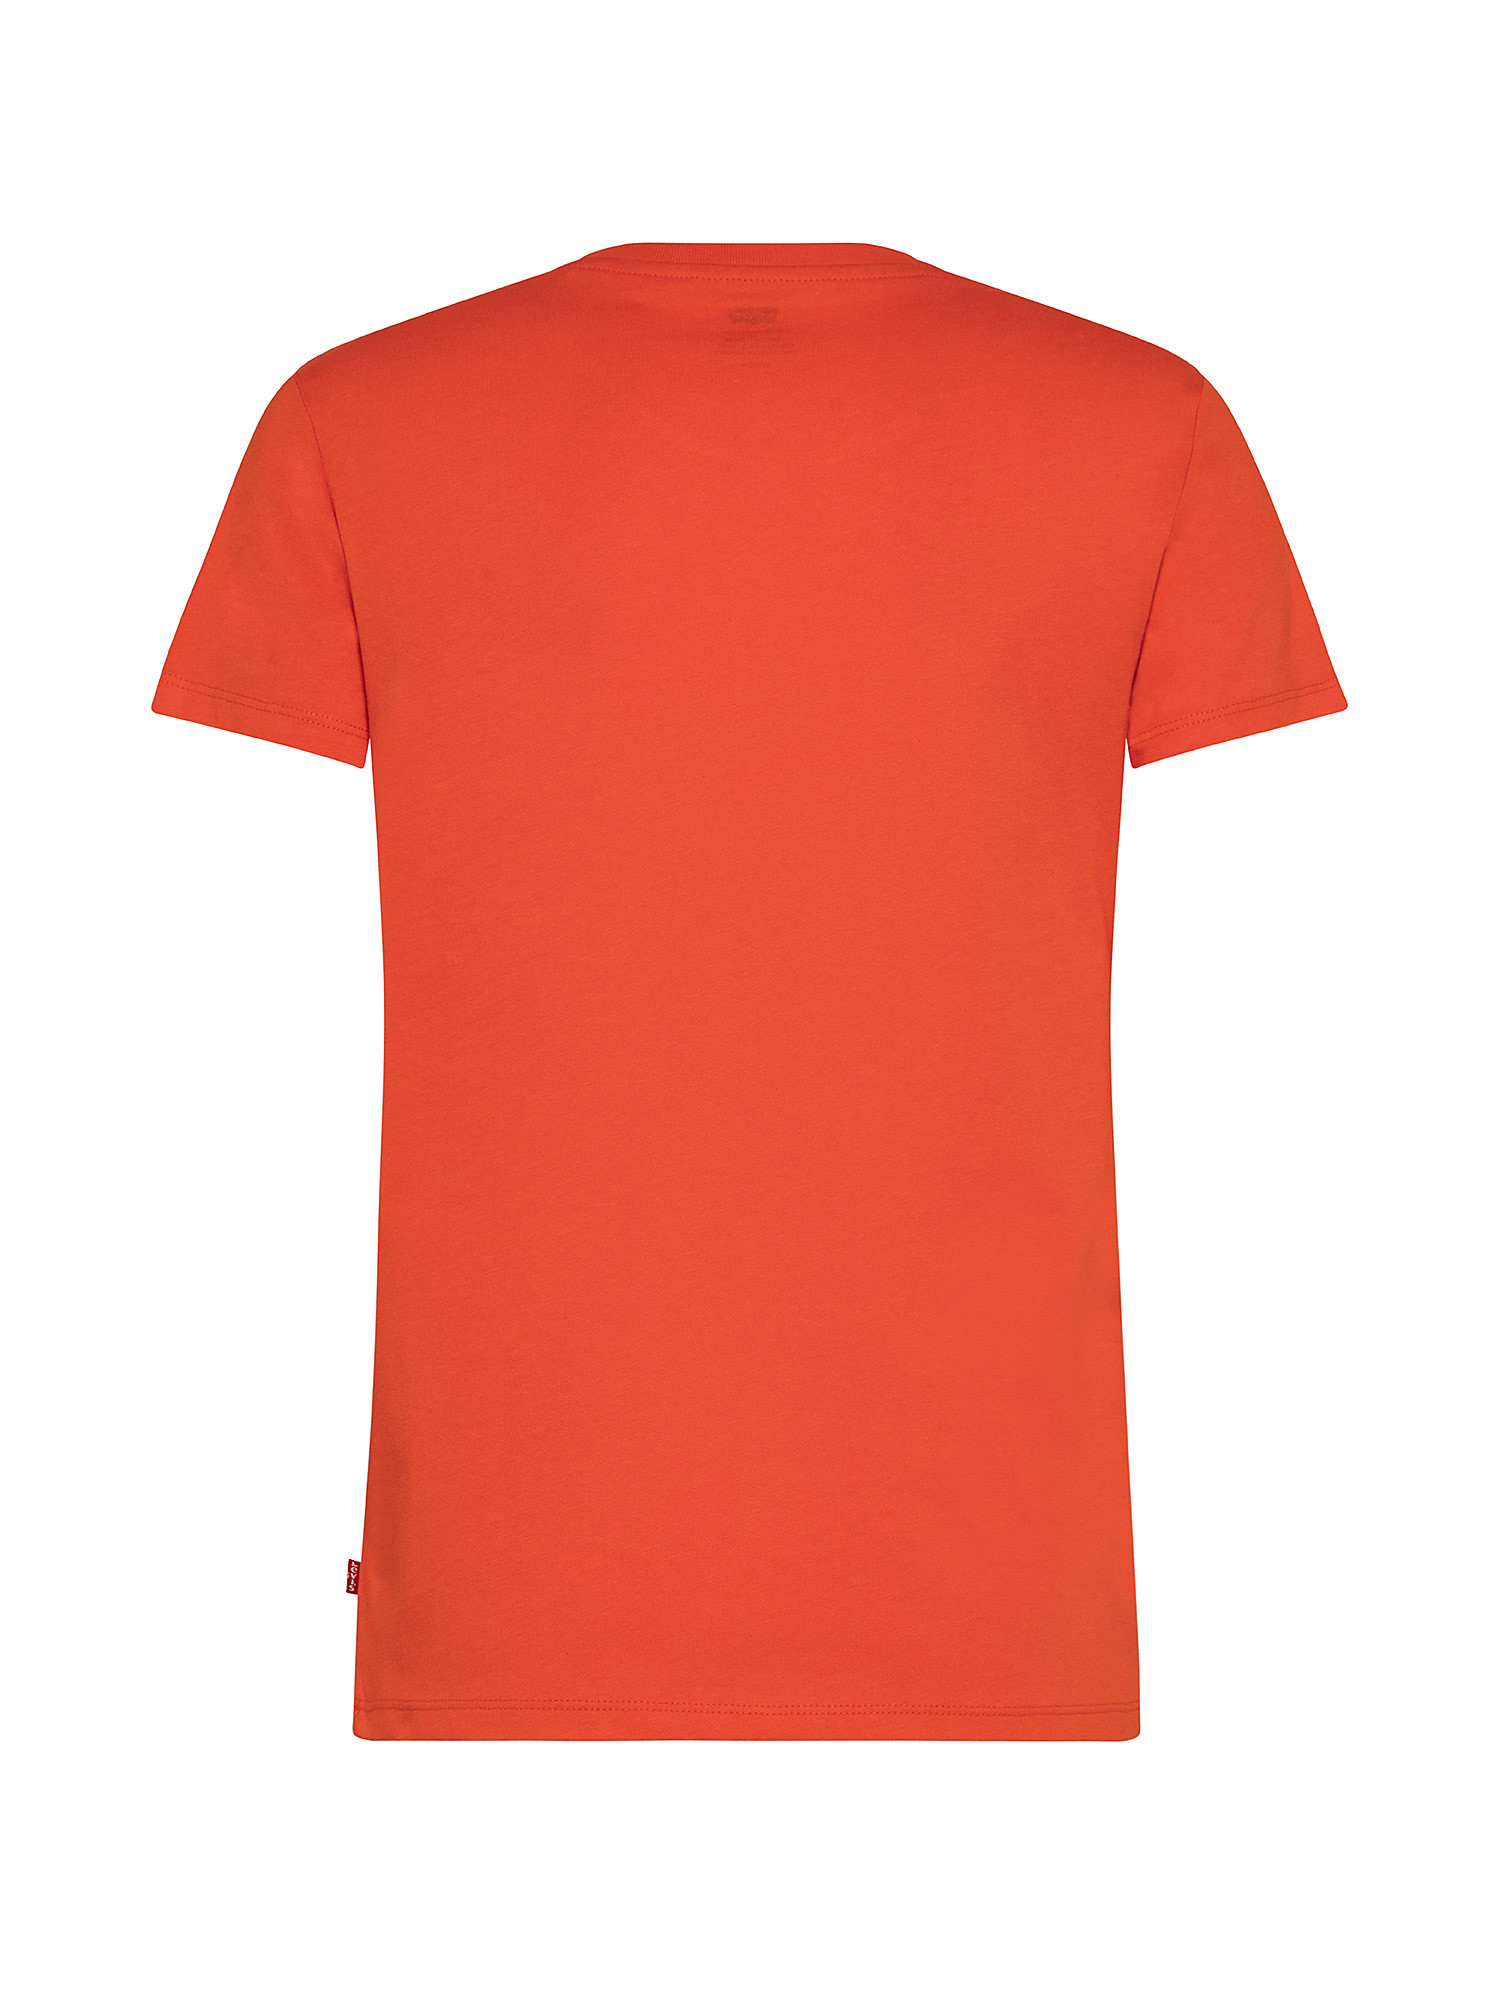 T-shirt Perfect Tee con logo, Arancione, large